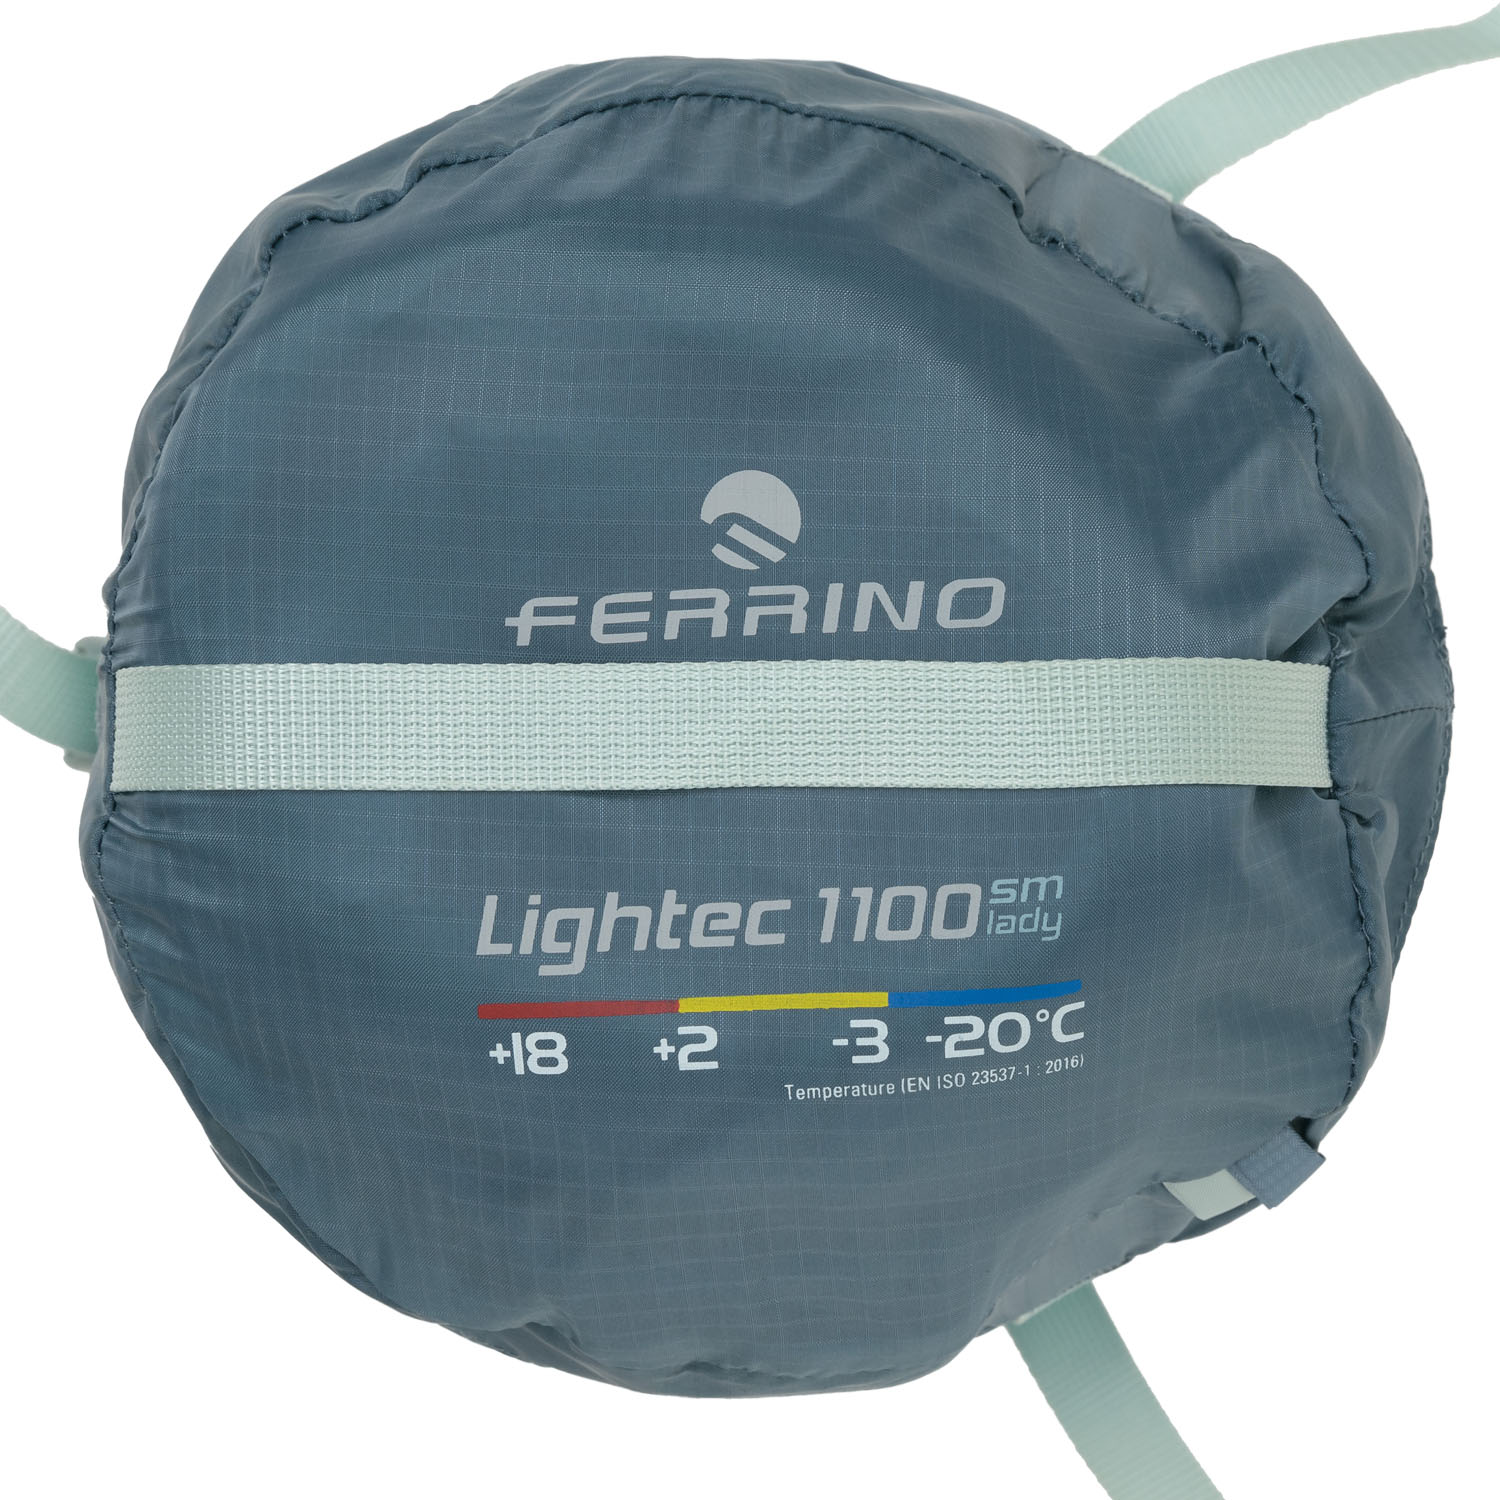 Спальник Ferrino Lightech Sm 1100 Lady Nut